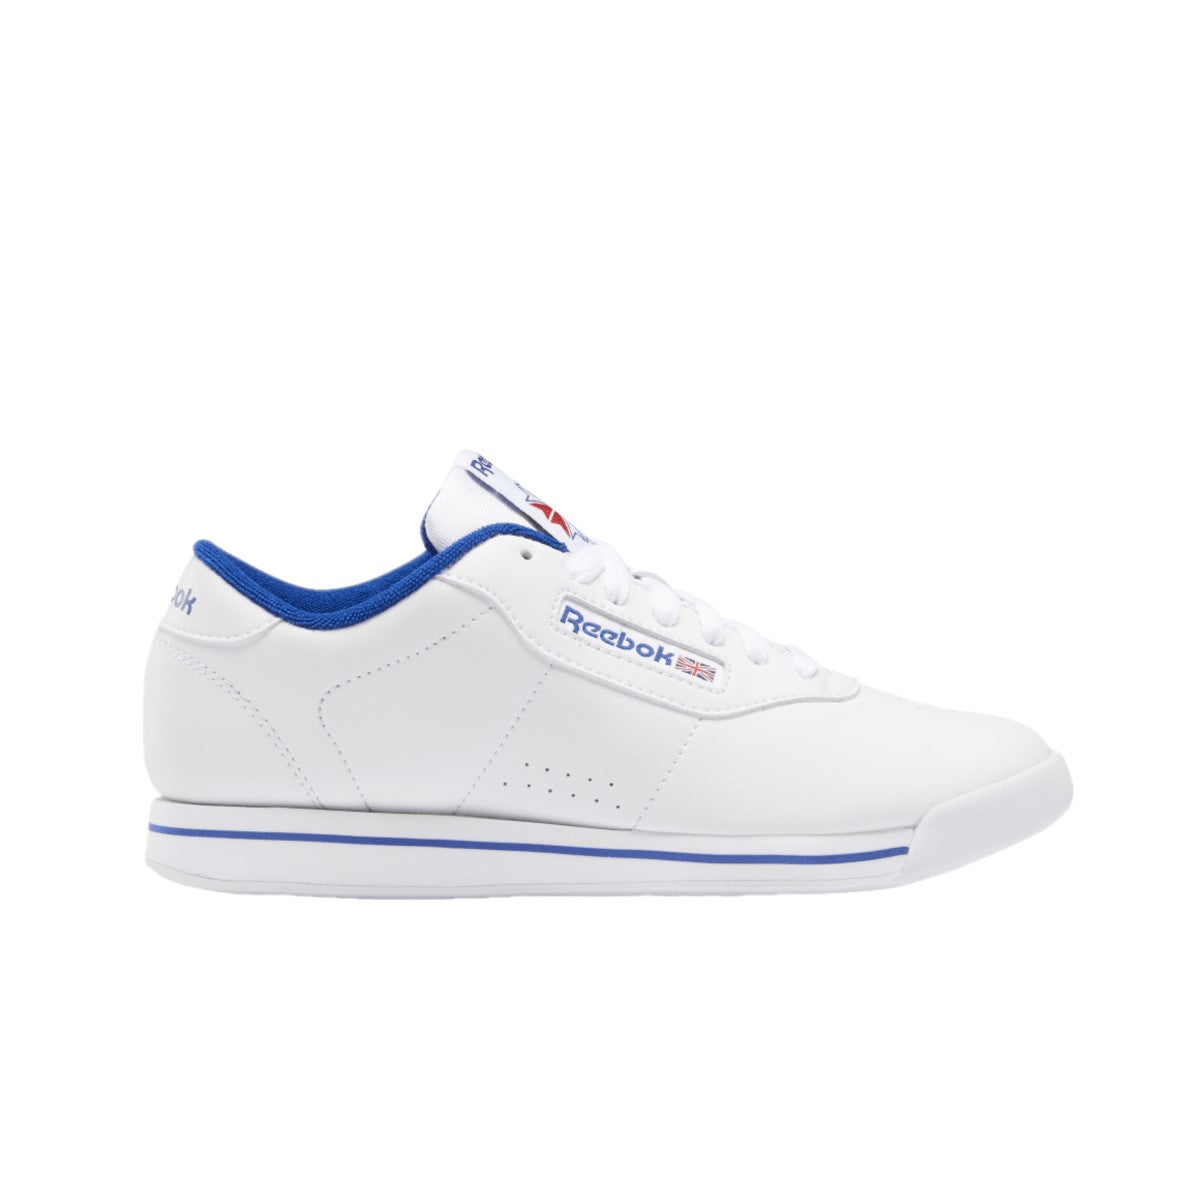 REEBOK FV5294 PRINCESS WMN'S (Medium) White/White/Collegiate Royal Synthetic/Leather Lifestyle Shoes